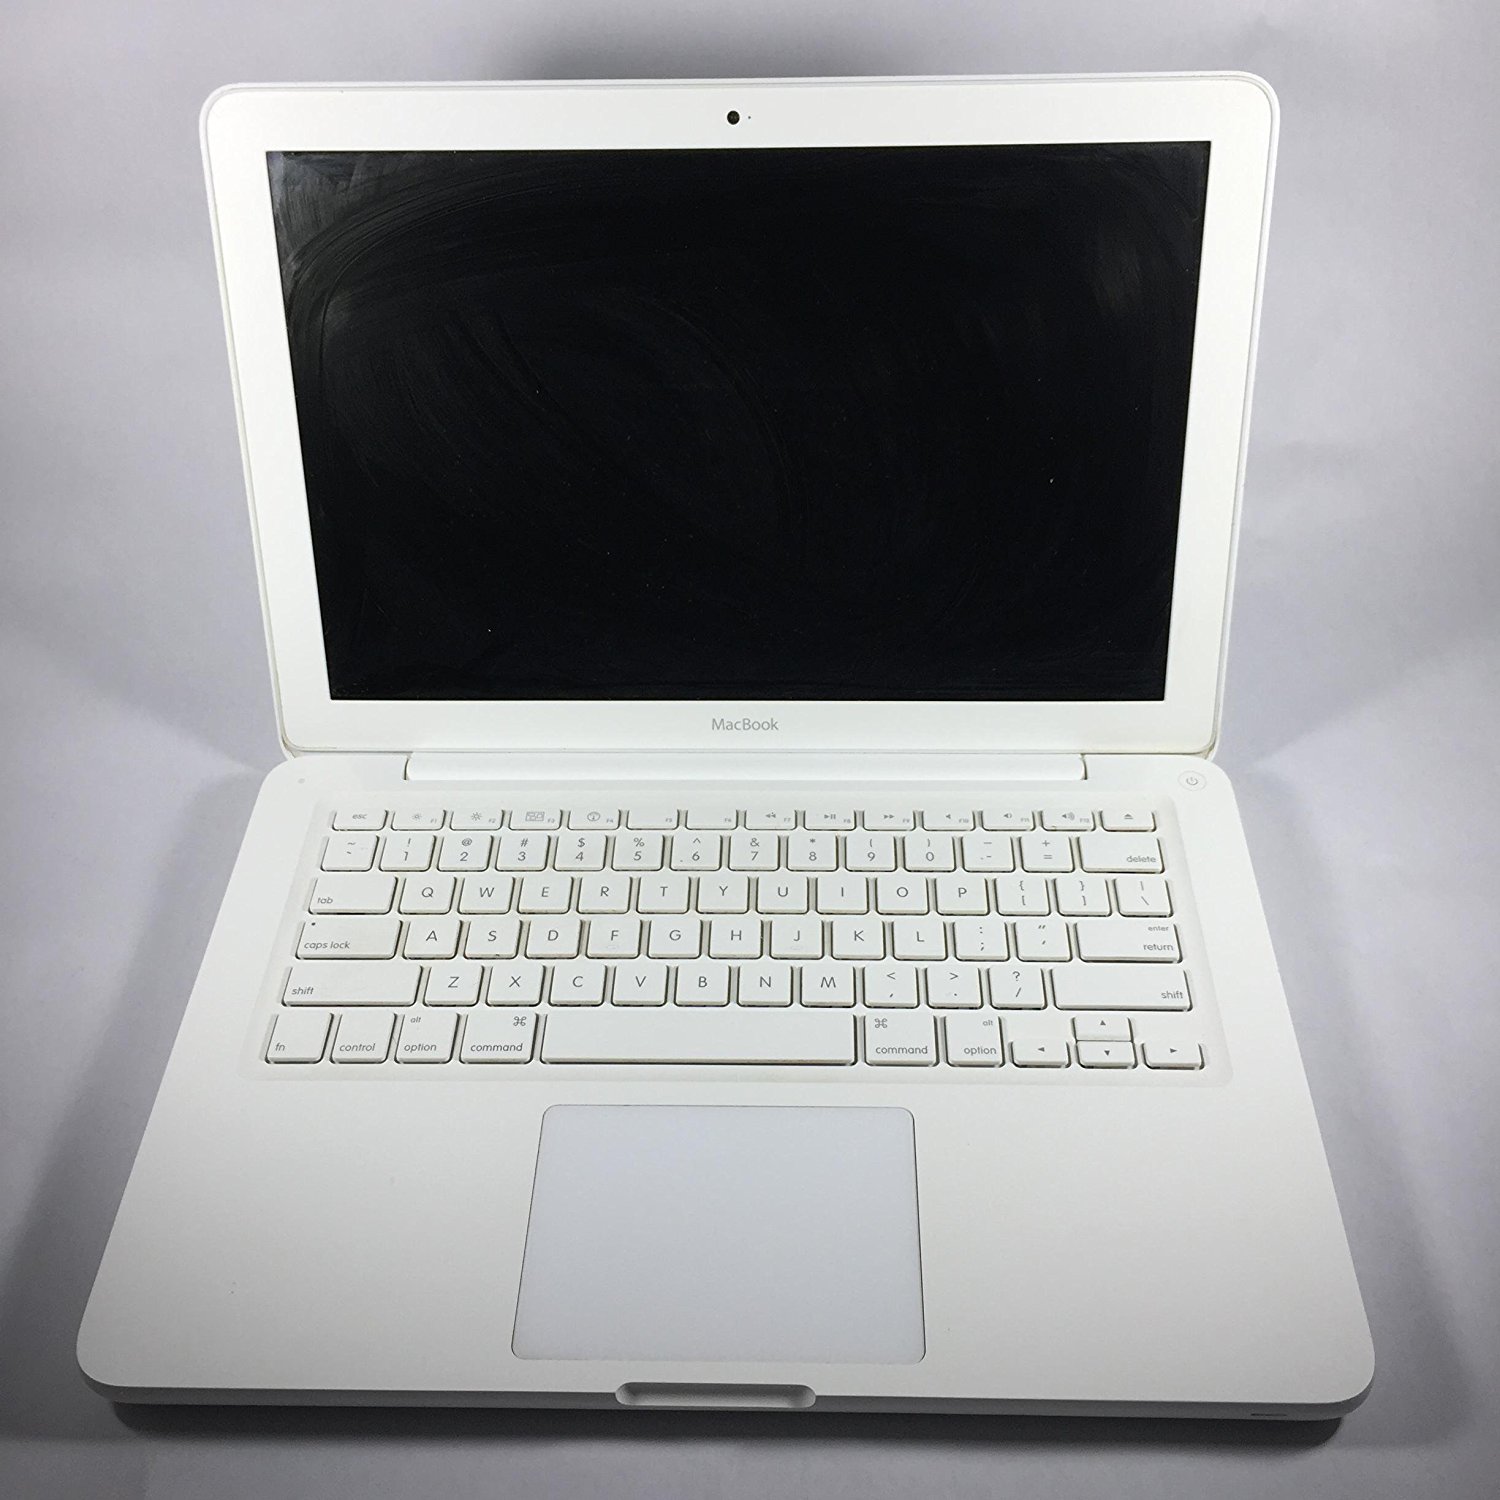 Amazon.com: Apple White Unibody Macbook - 2010 (A1342/mc516ll/a ...